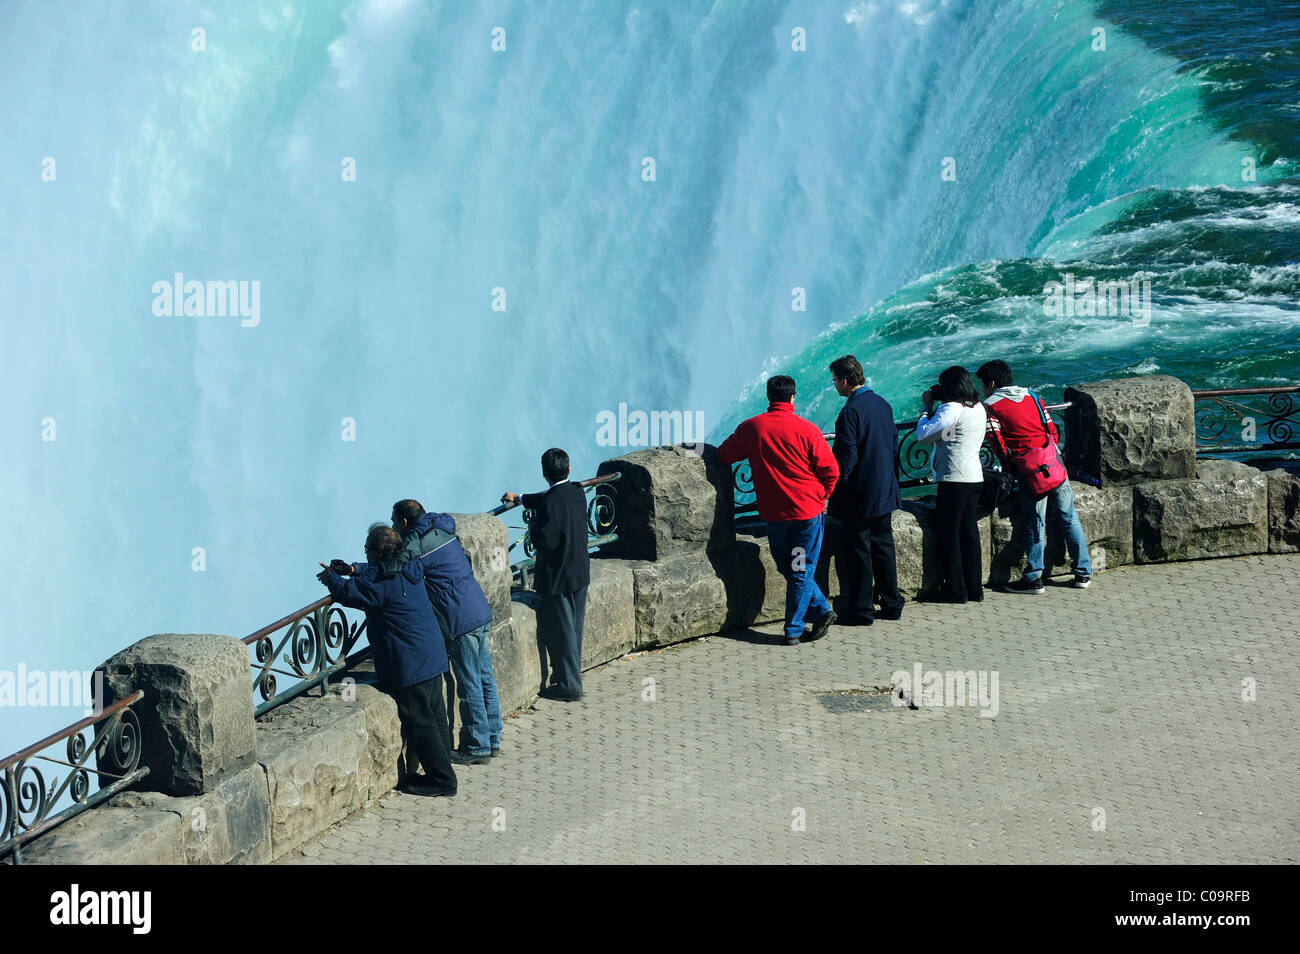 Les touristes sur le pont d'observation, Niagara Falls, Ontario, Canada Banque D'Images